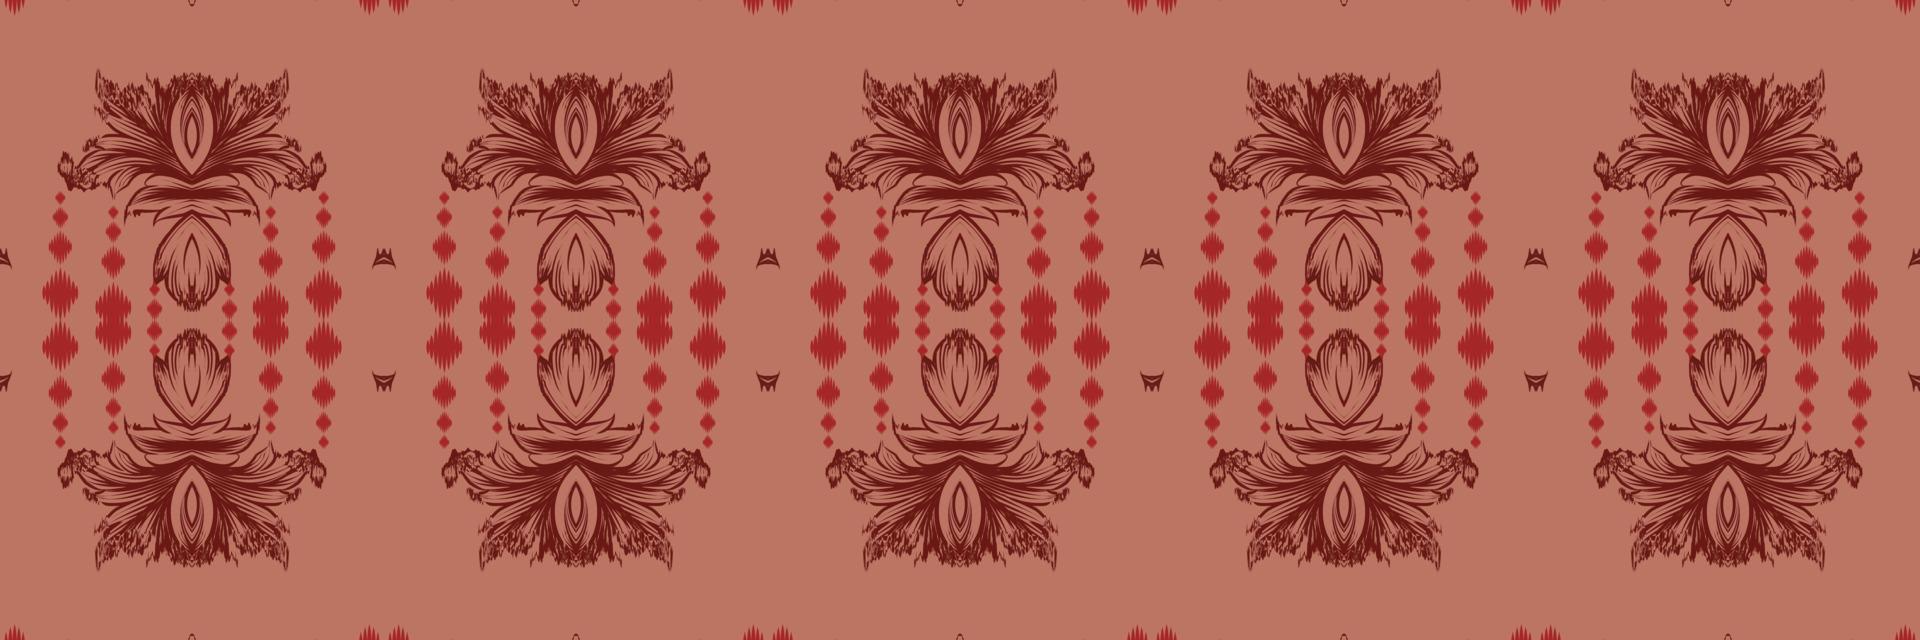 ikkat o ikat imprime batik textil patrón sin costuras diseño de vector digital para imprimir saree kurti borneo borde de tela símbolos de pincel muestras ropa de fiesta